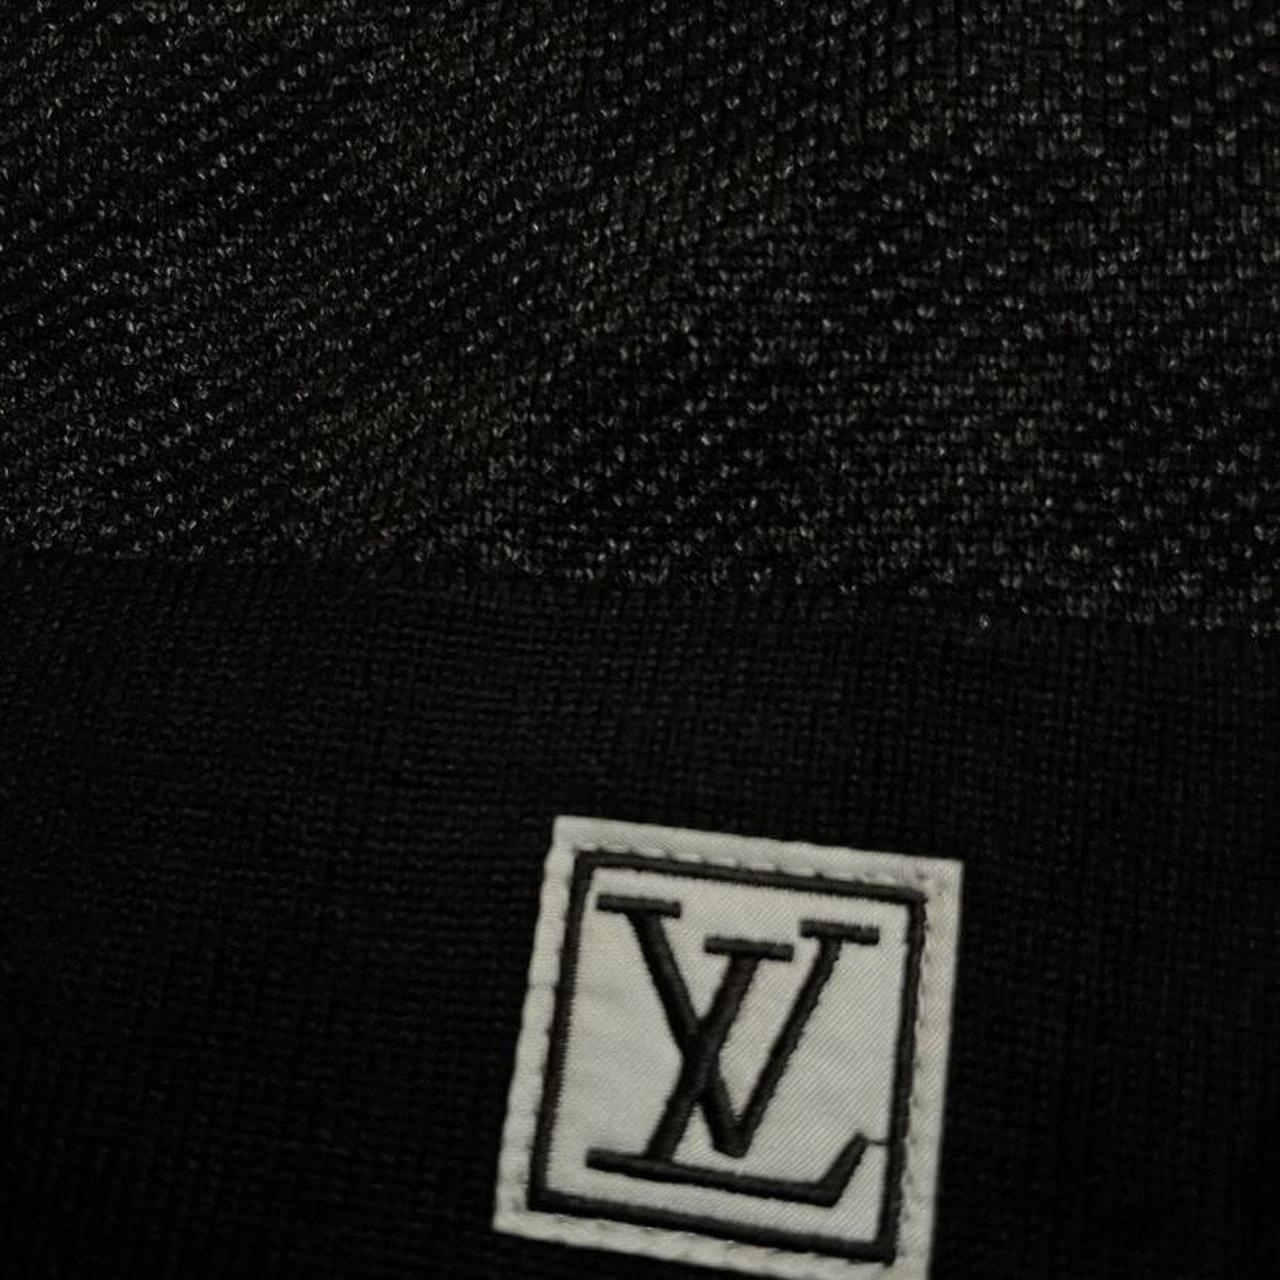 Louis Vuitton Light Grey Damier Beanie